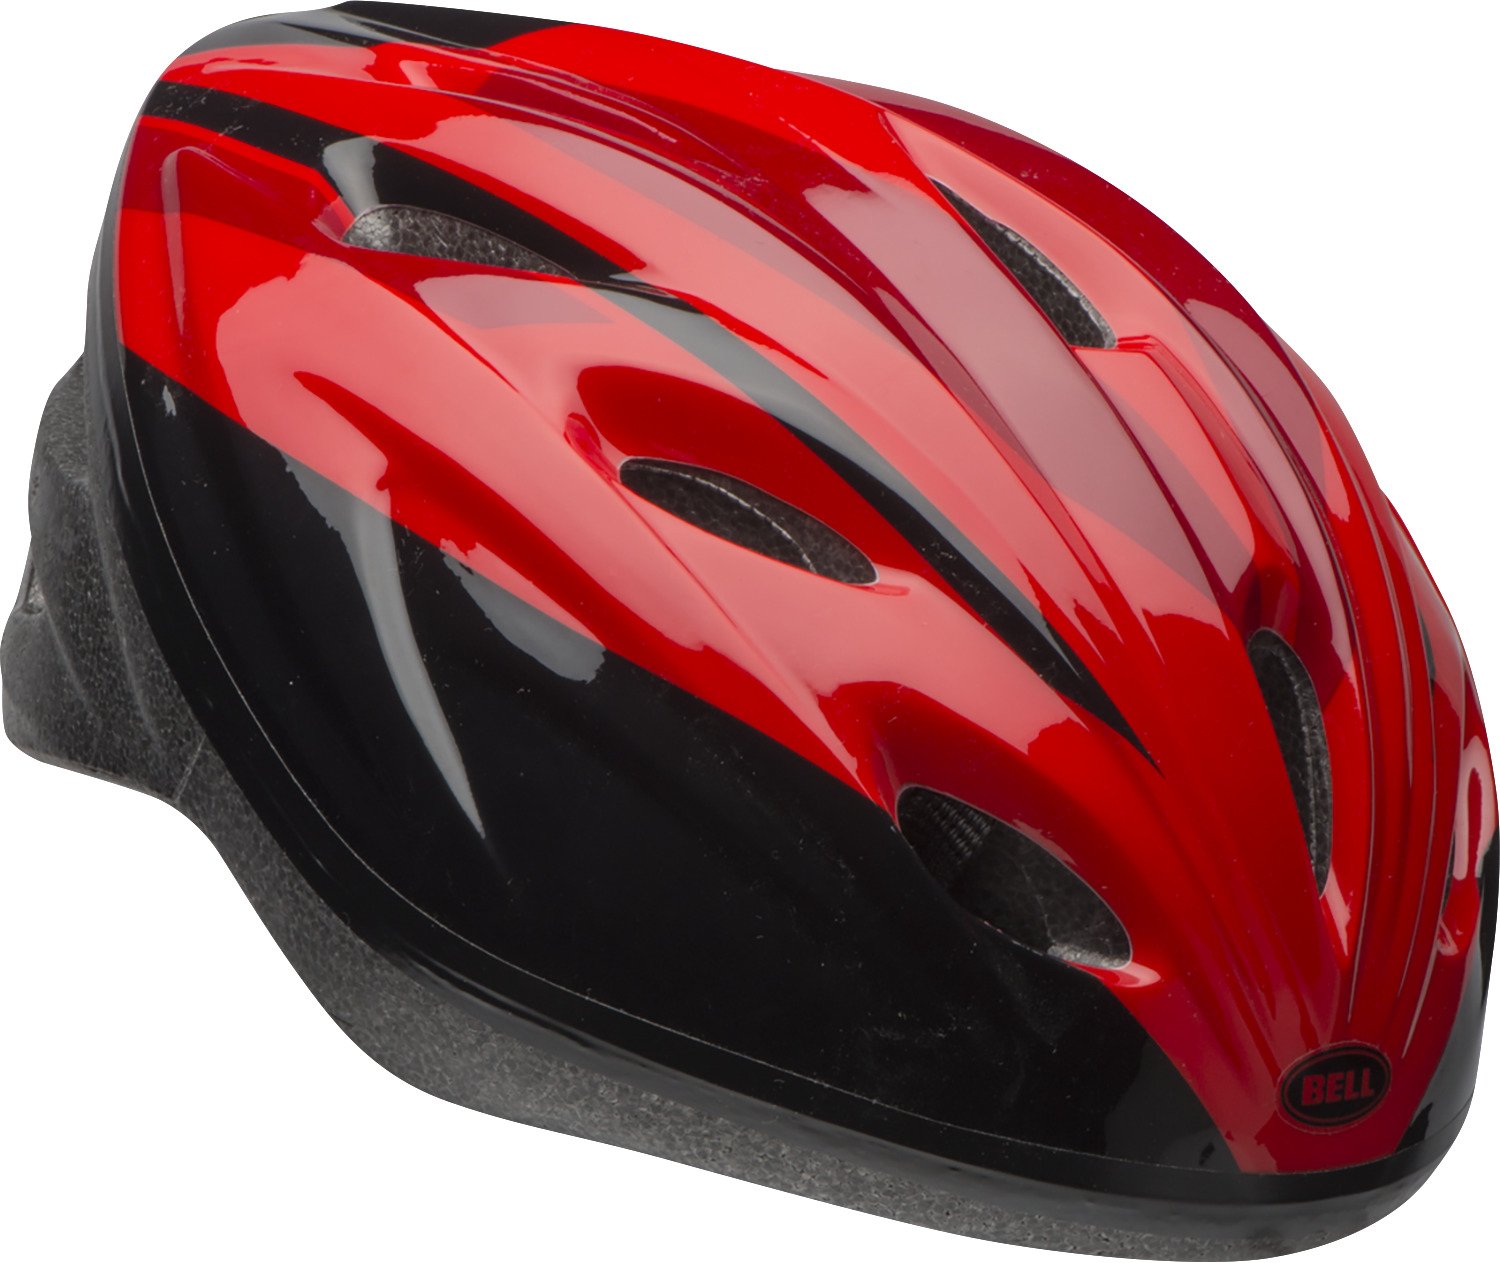 academy bike helmets